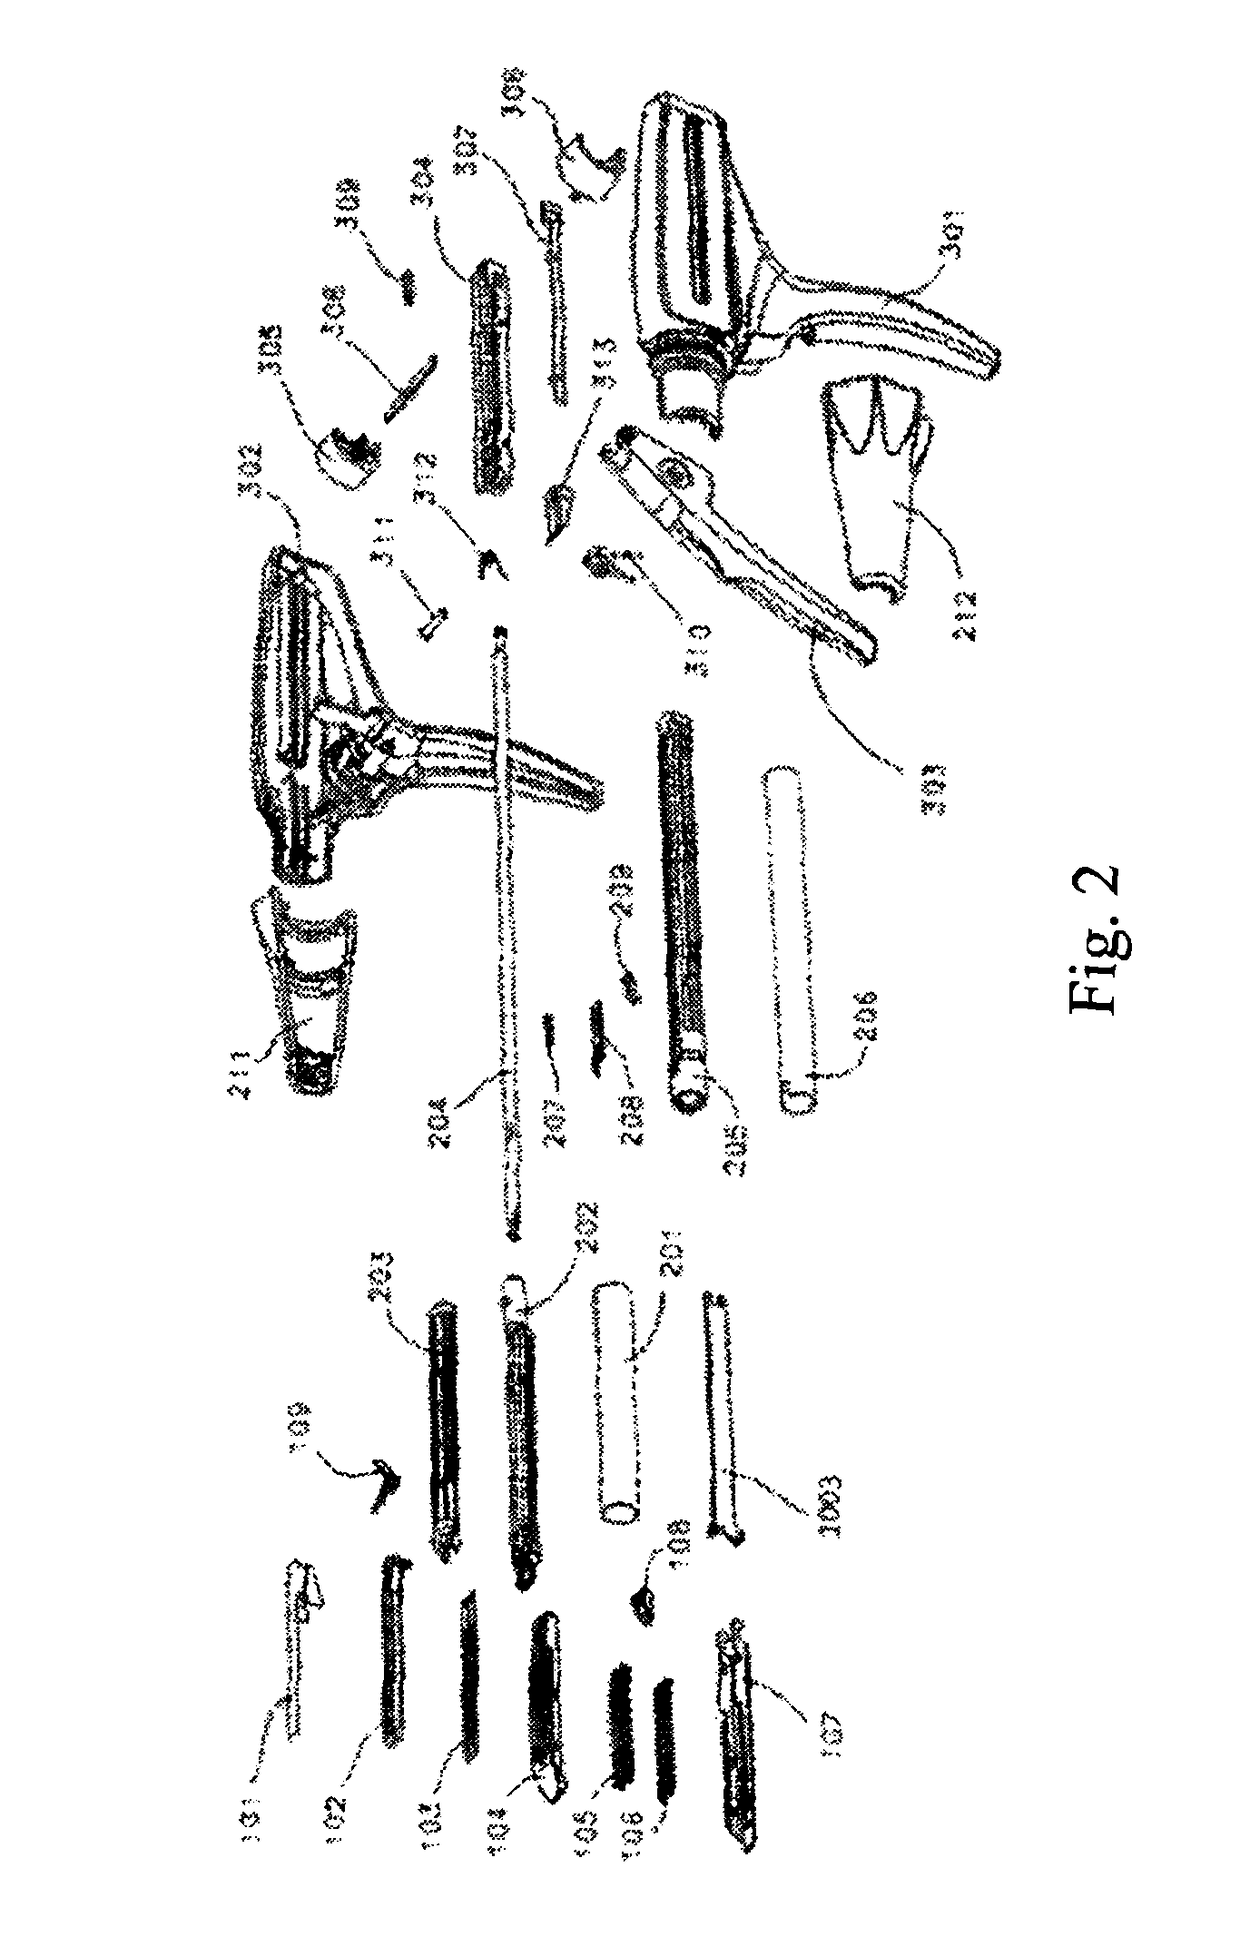 Surgical apparatus actuator